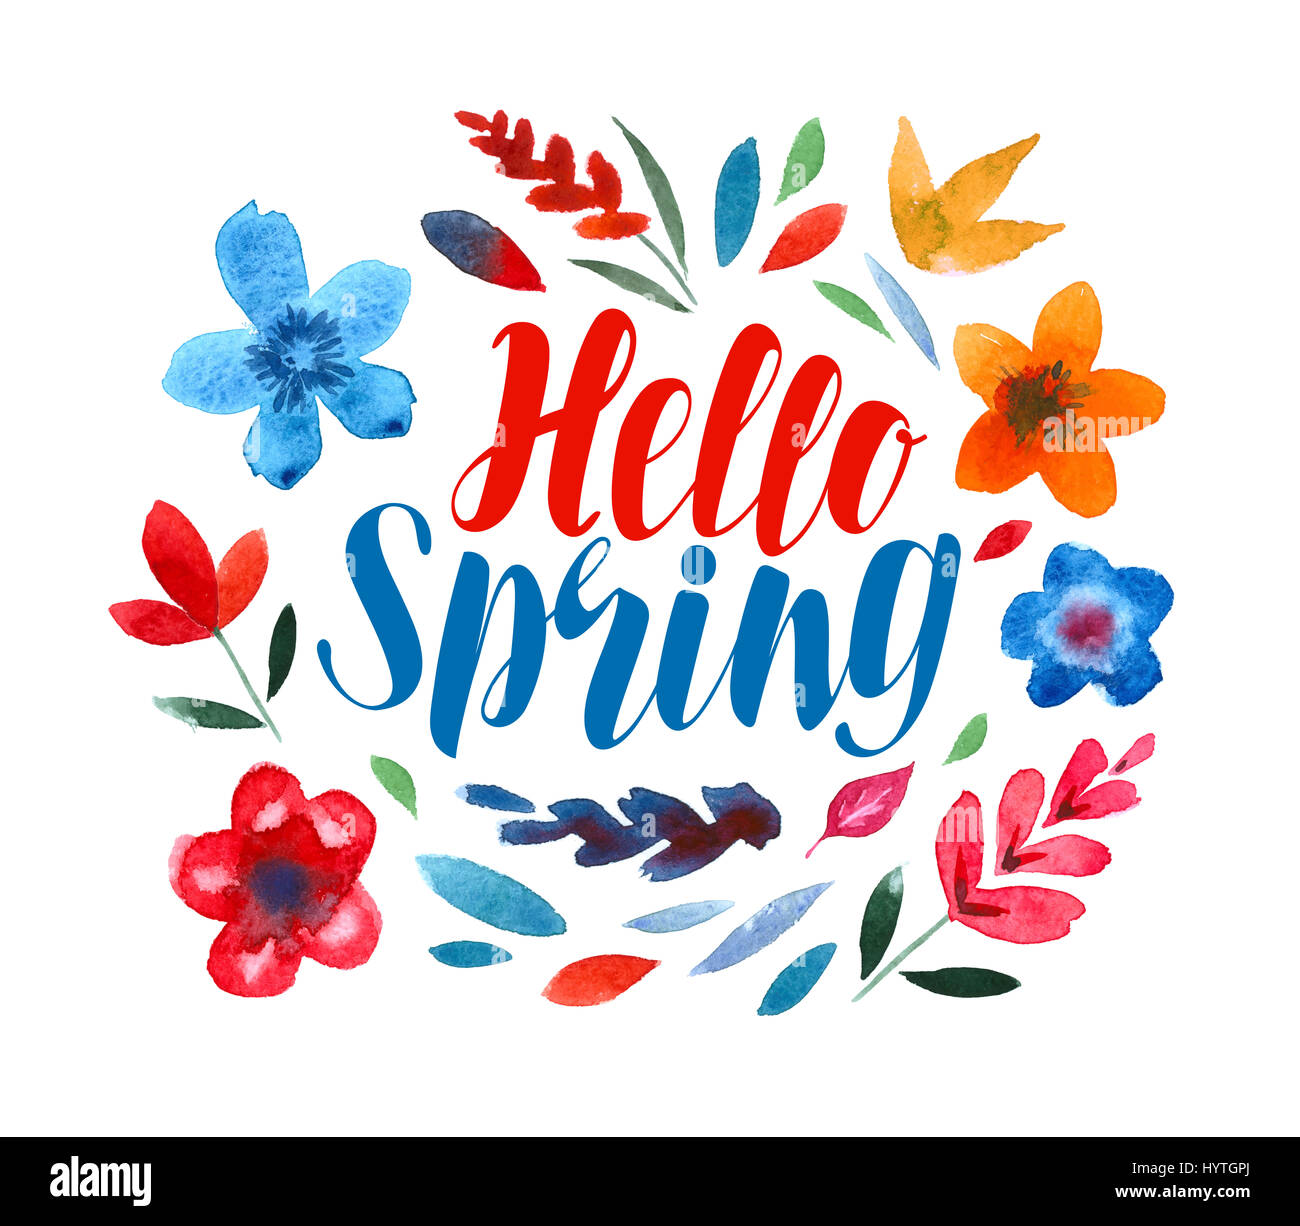 Hello spring, lettering. Flower pattern Stock Photo